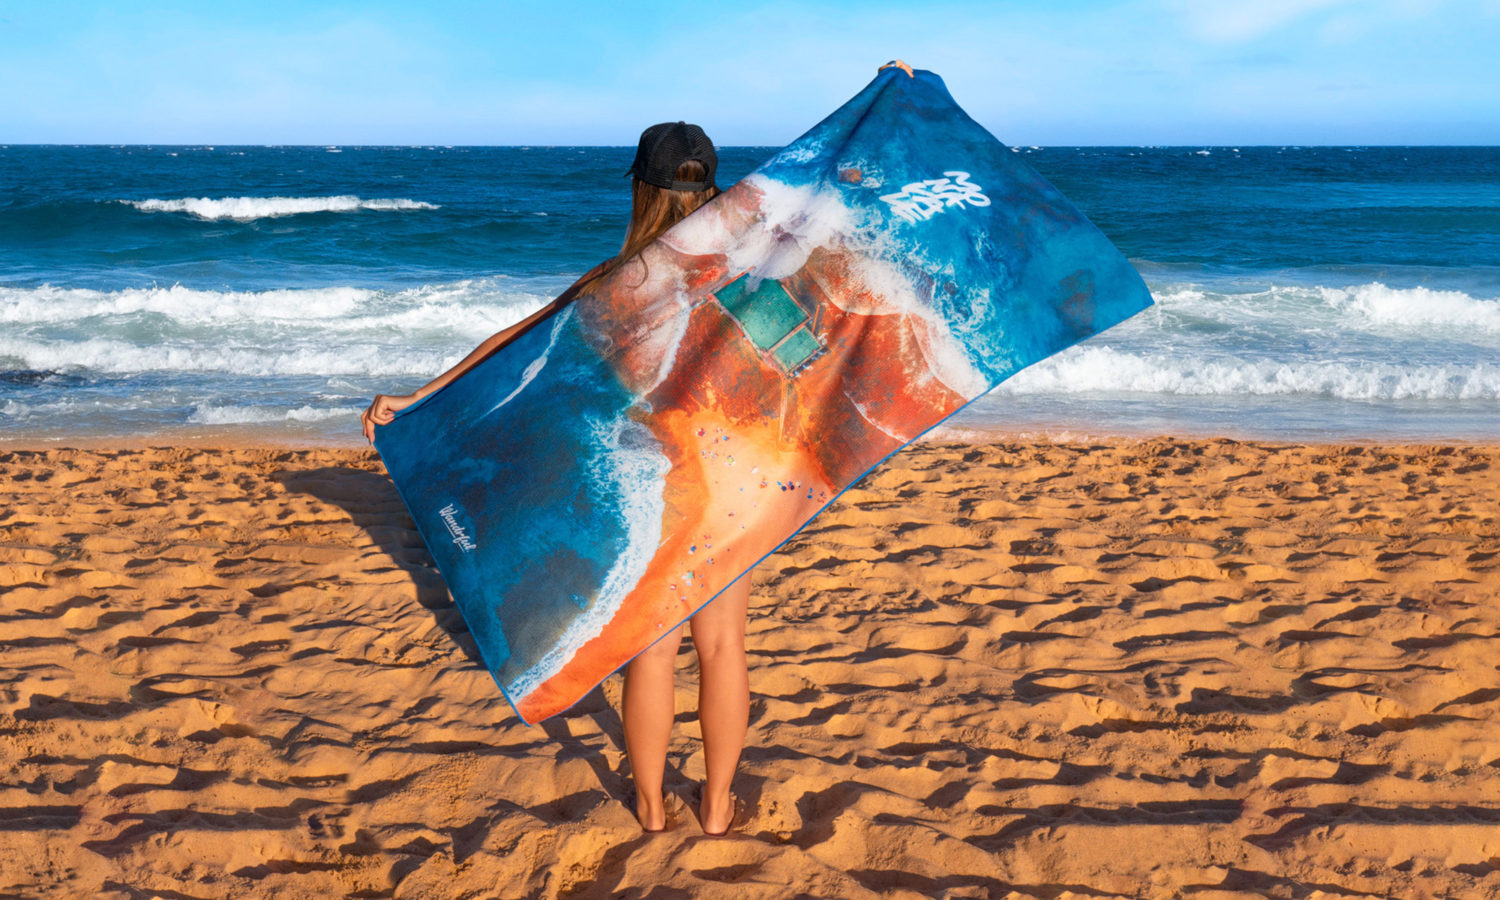 Wandrful Beach Towel Mona Vale Beach. Sand-free, eco-friendly, designer, beach towels.